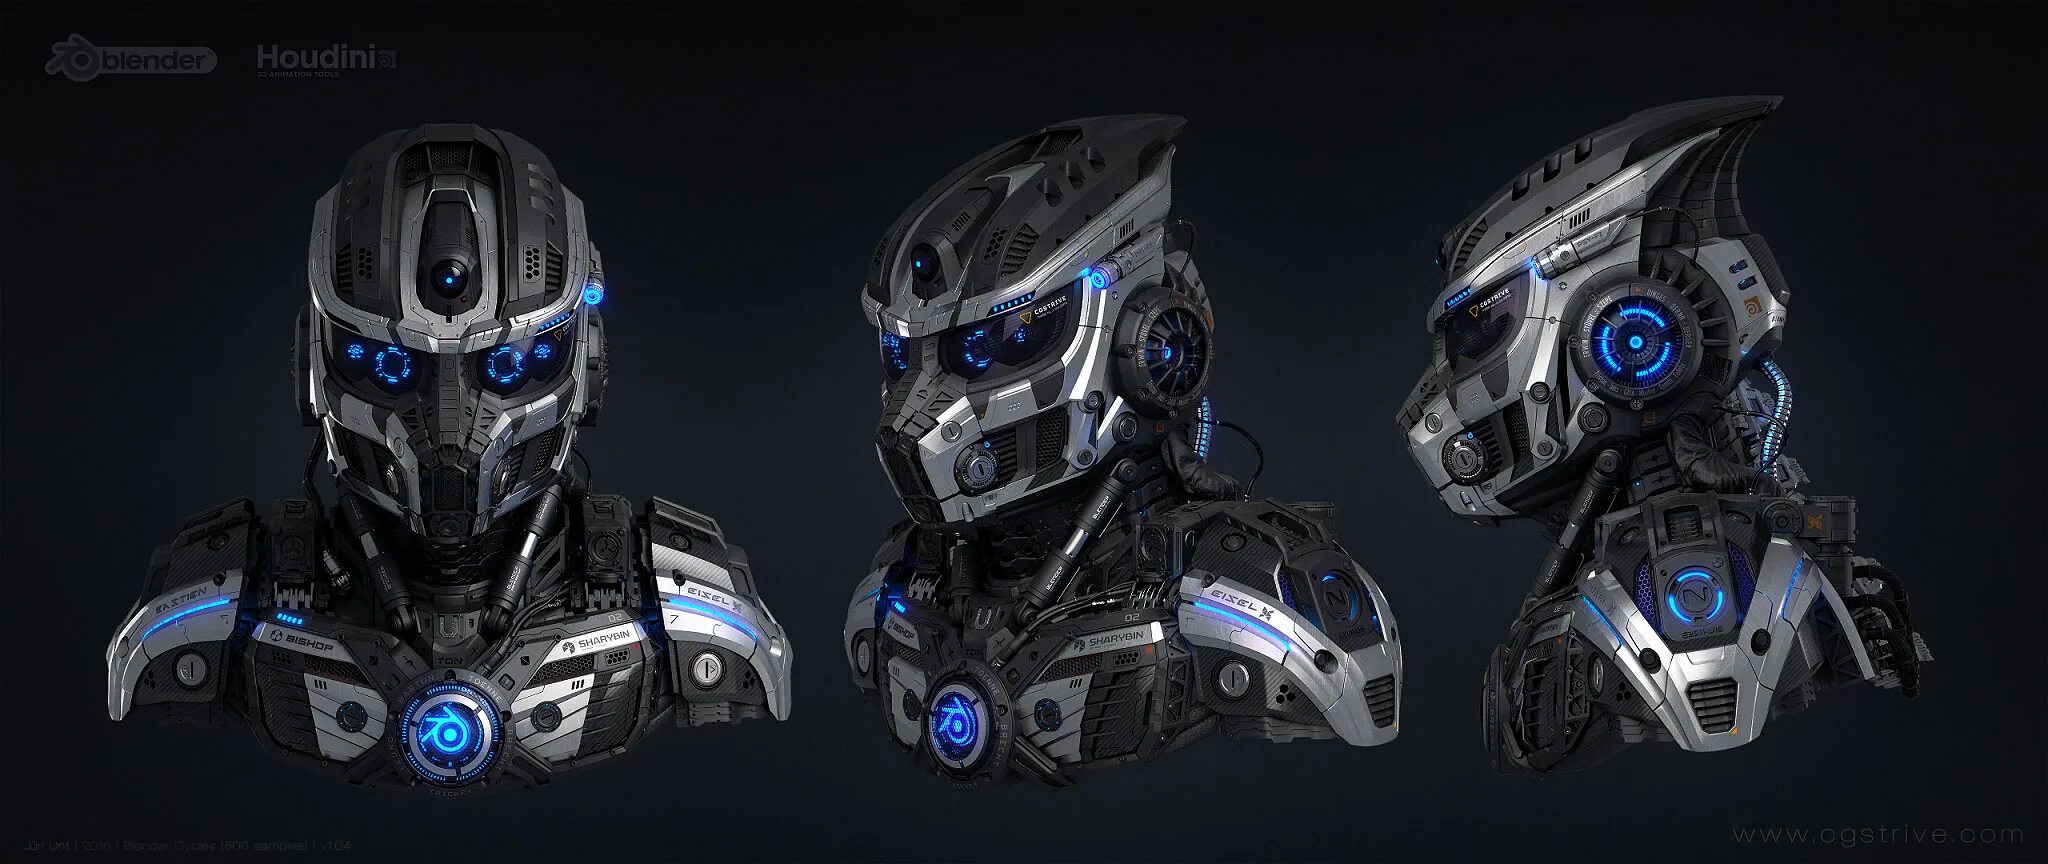 Honor r2 rob 01. Маска Sci-Fi экзо шлемы. Блендер 3д scifi. Крутые роботы. Робот концепт.